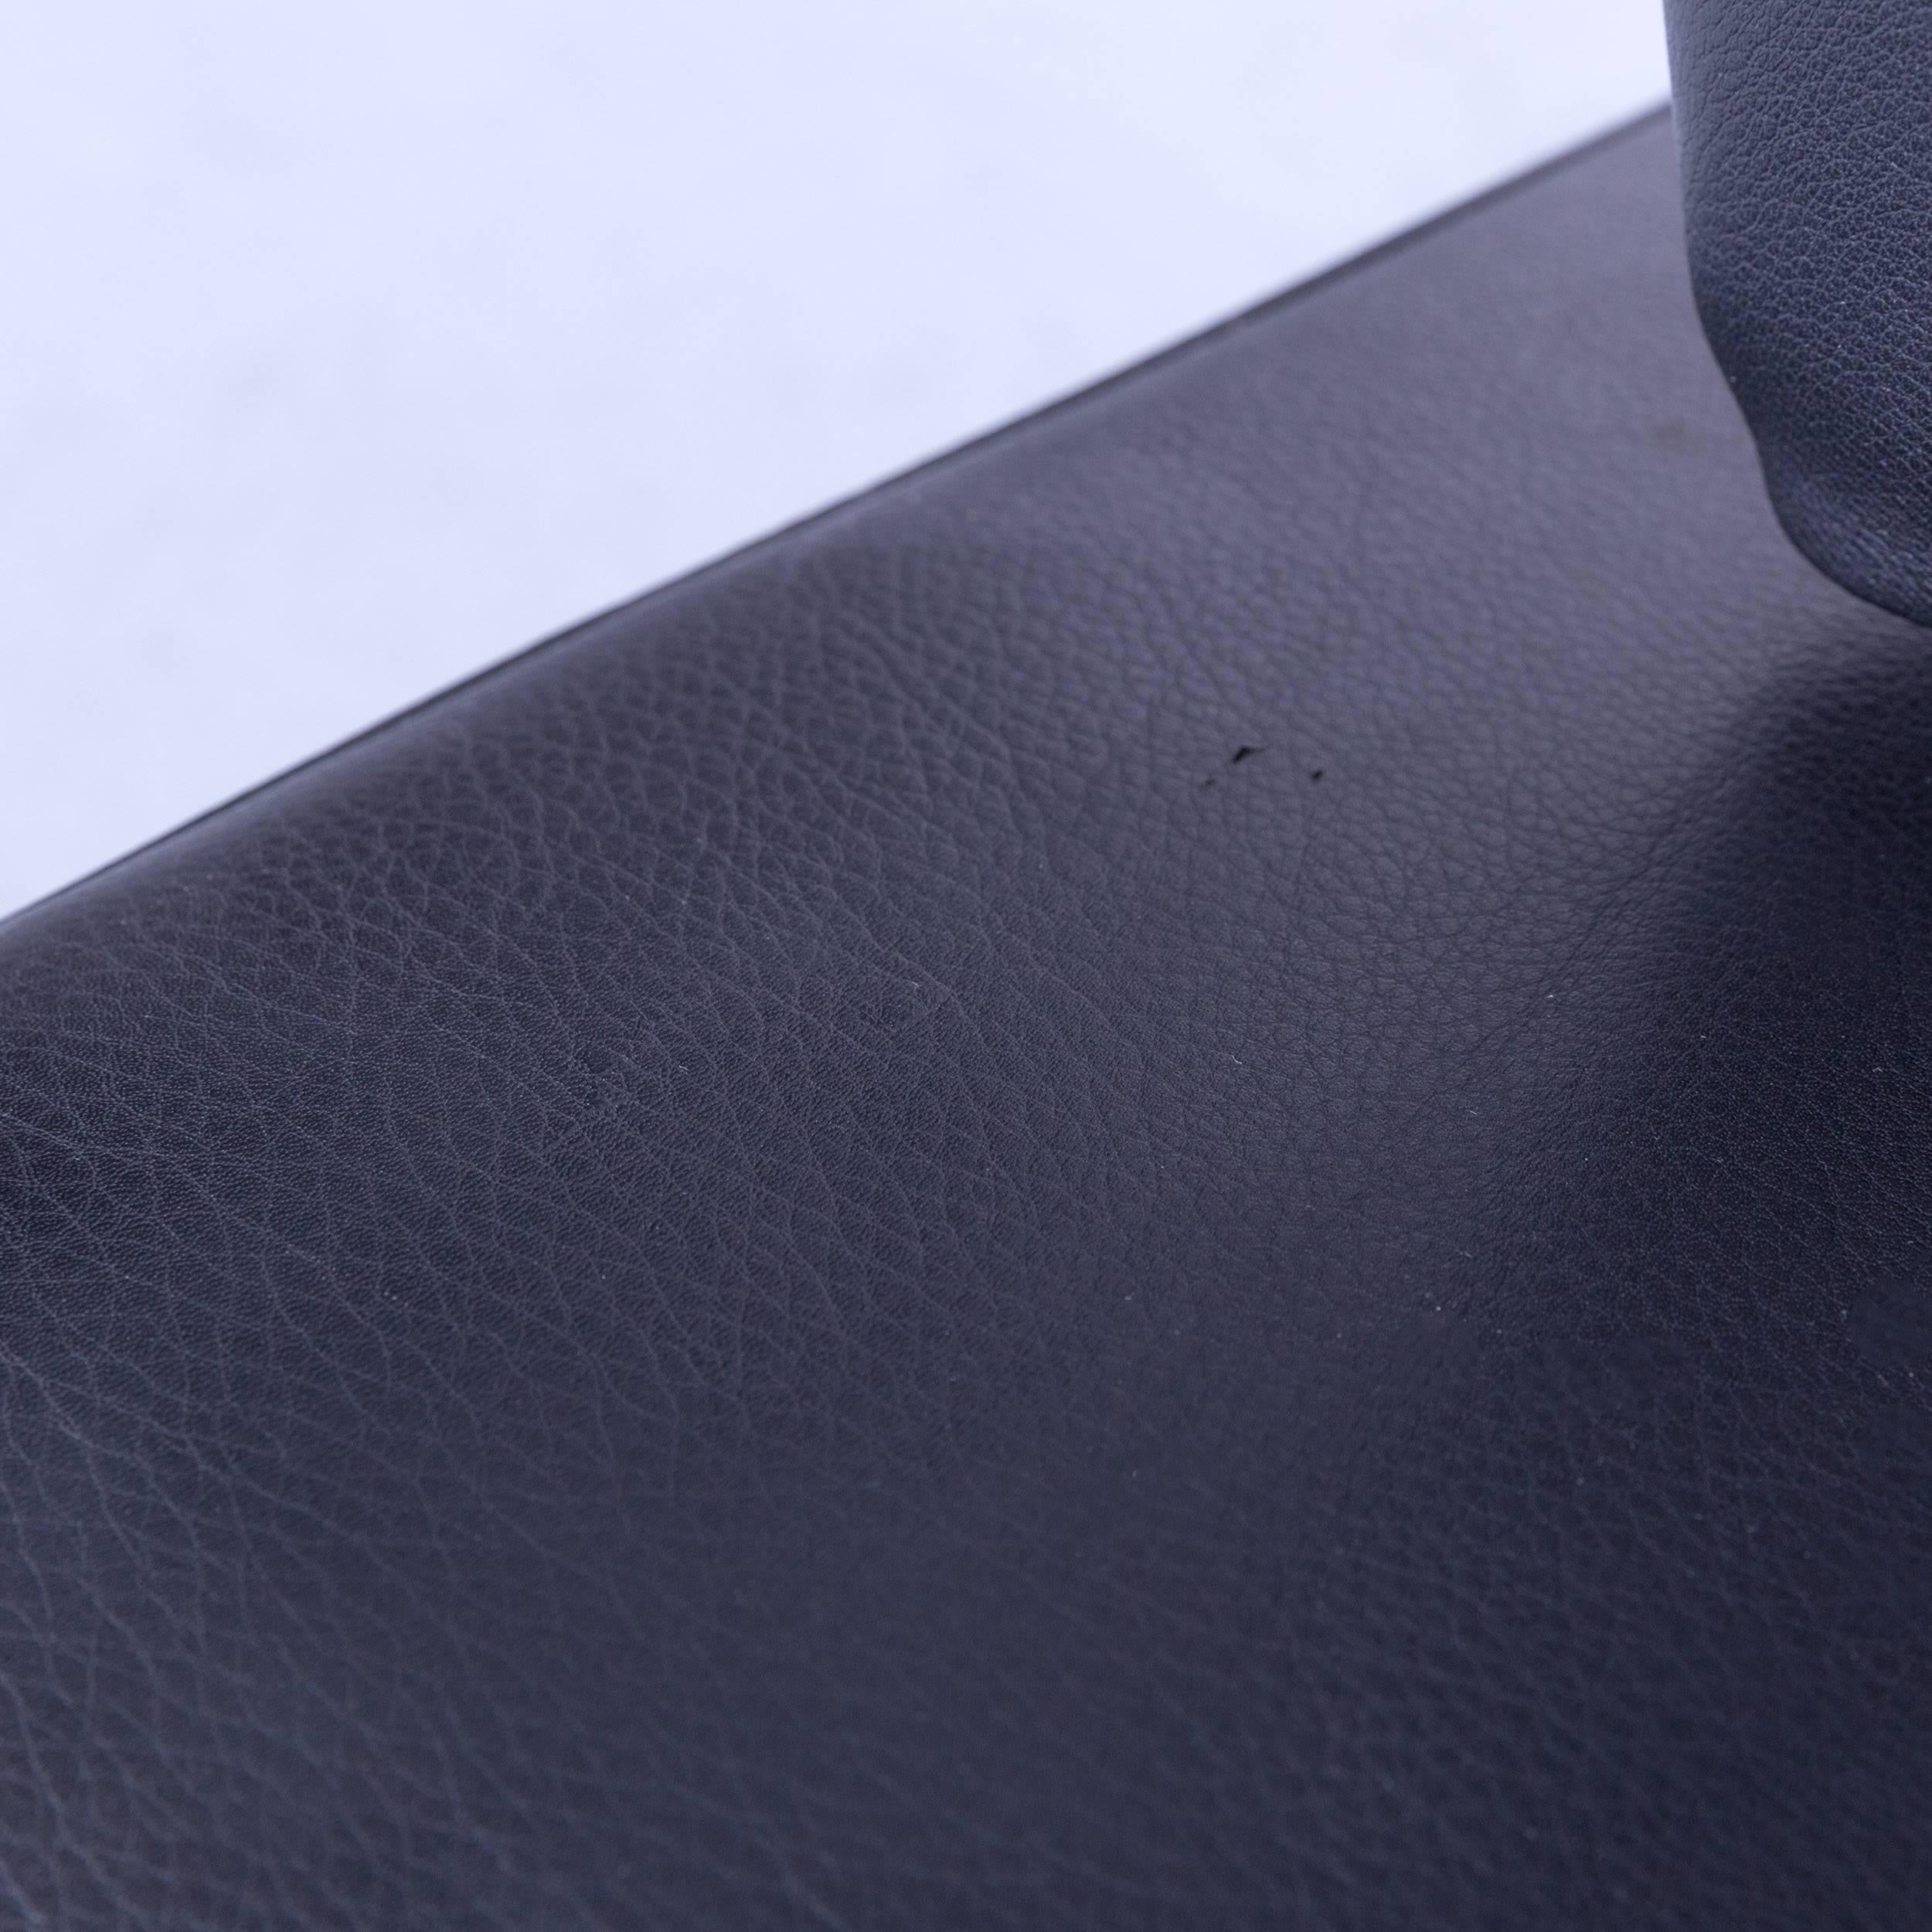 Contemporary COR Circum Designer Sofa Black Leather Three-Seat Couch Function Modern